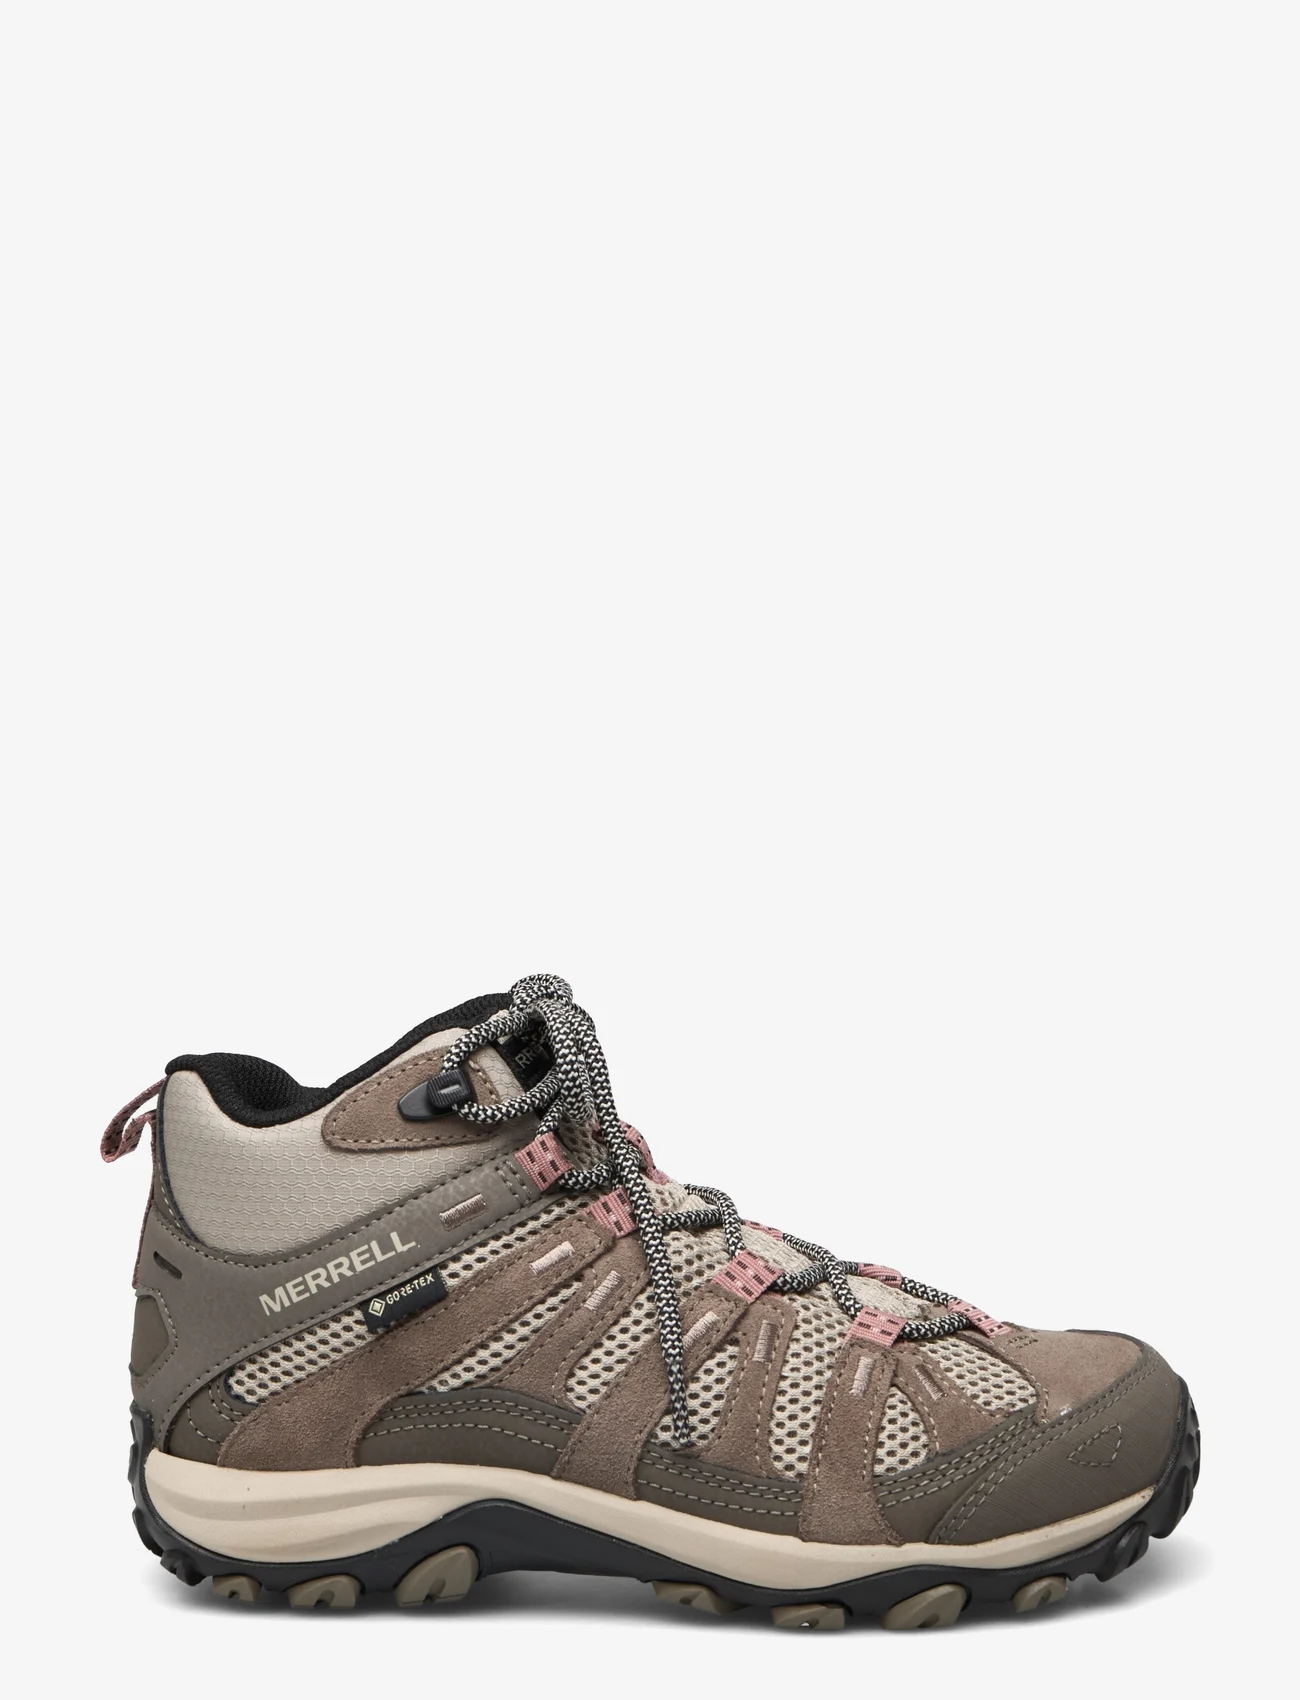 Merrell - Women's Alverstone 2 Mid GTX - Alum - hiking shoes - aluminum - 1